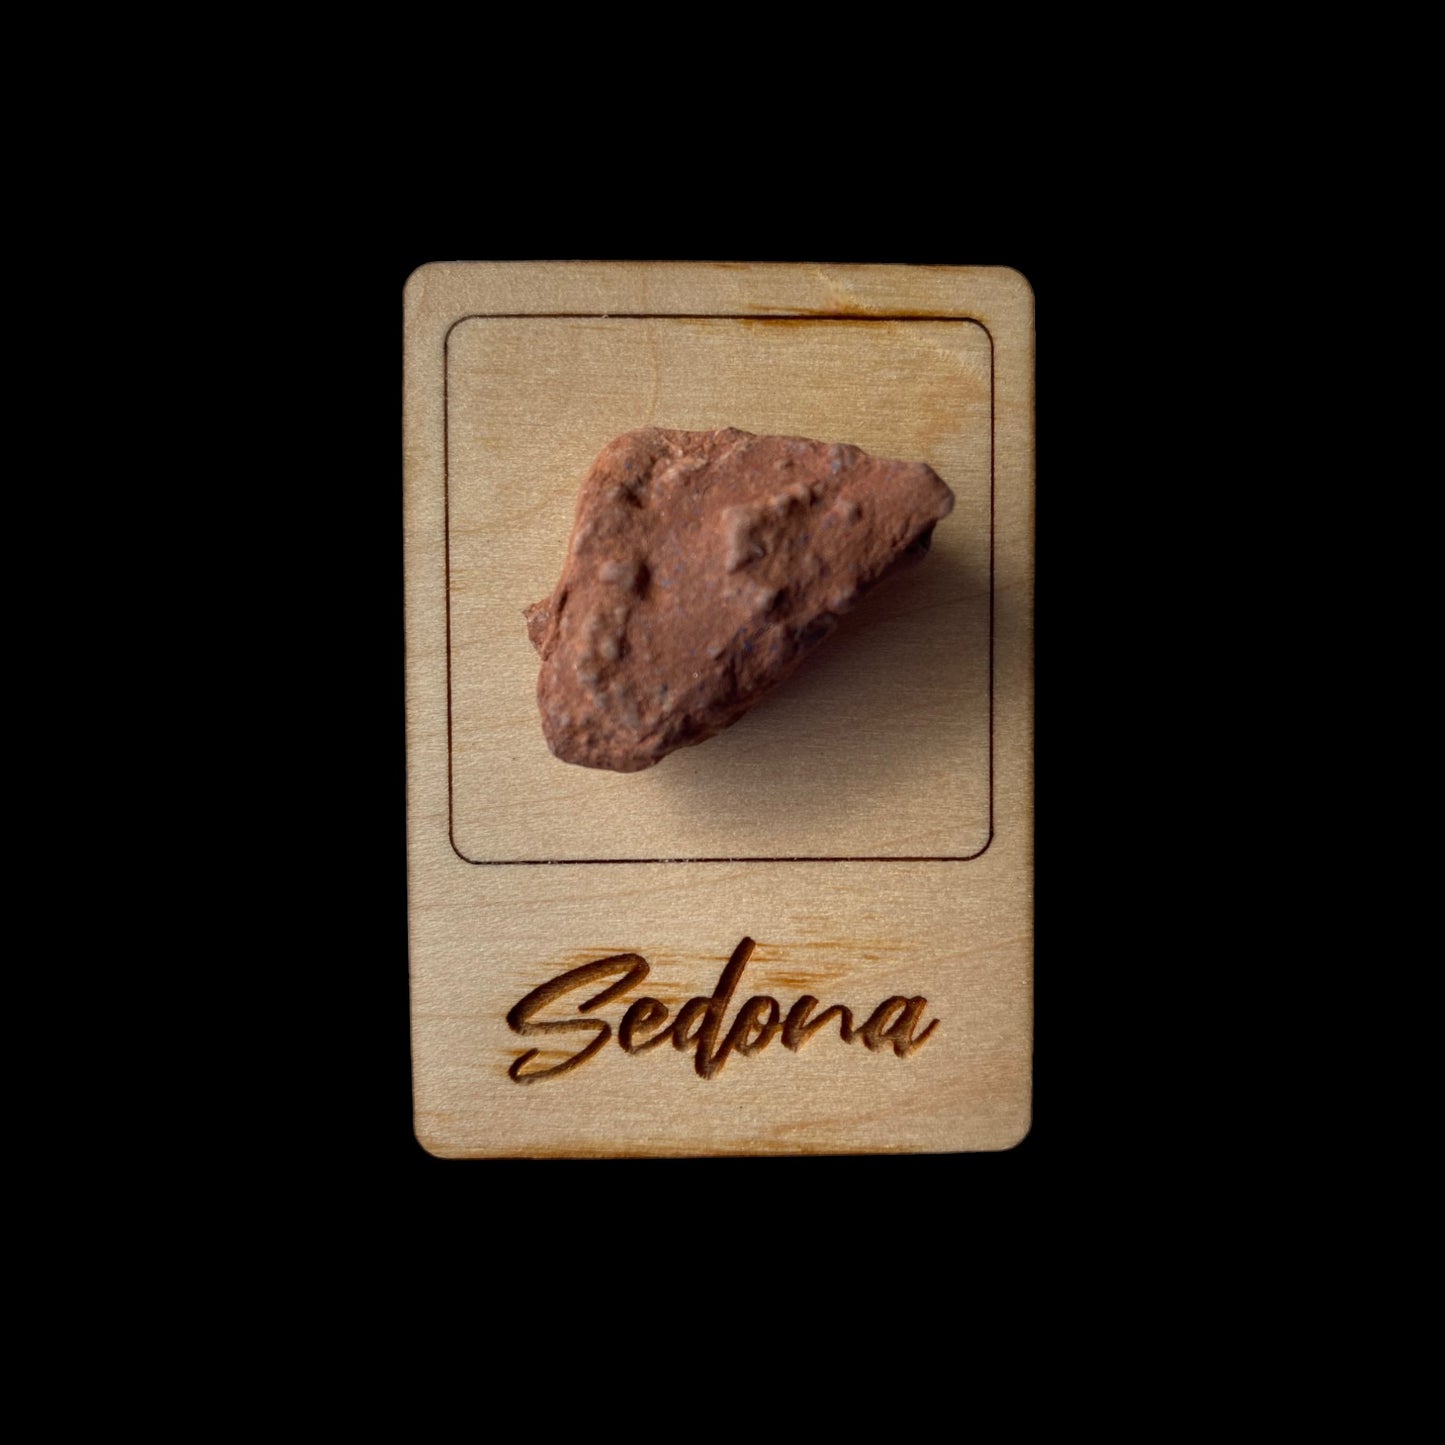 A piece of Sedona Rock magnet